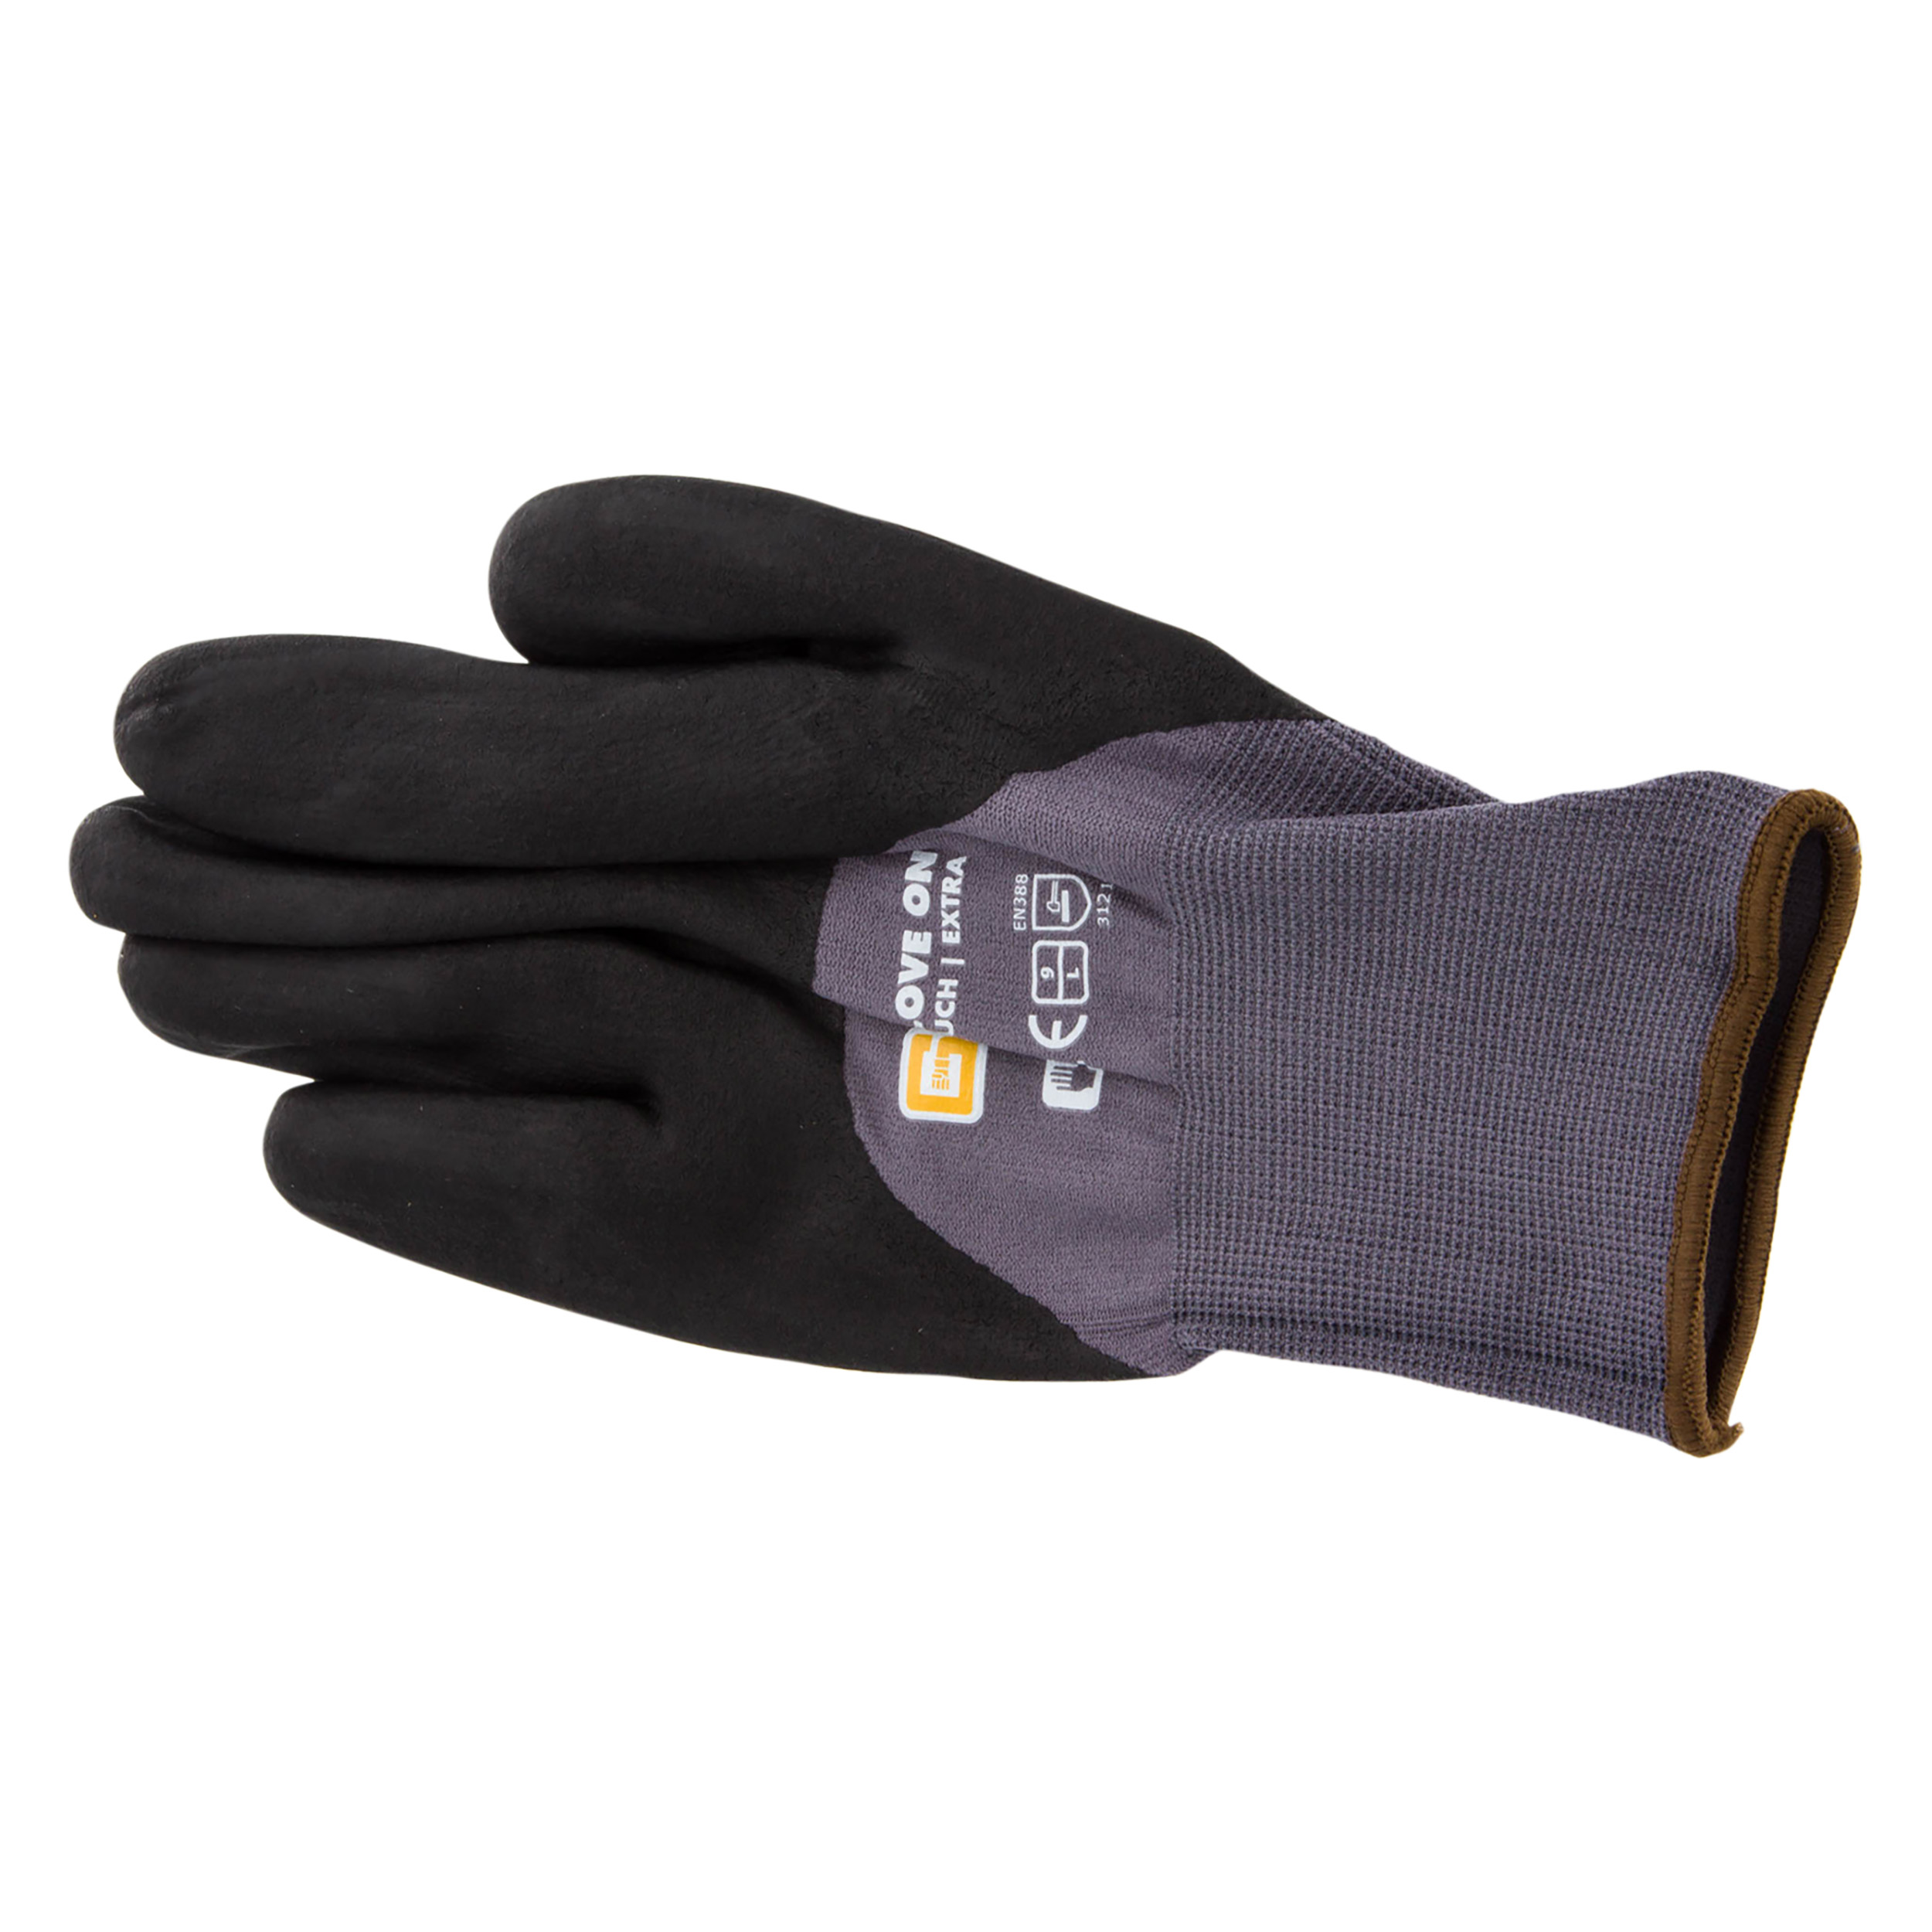 21.080.21 Glove On Touch werkhandschoen touch extra - L